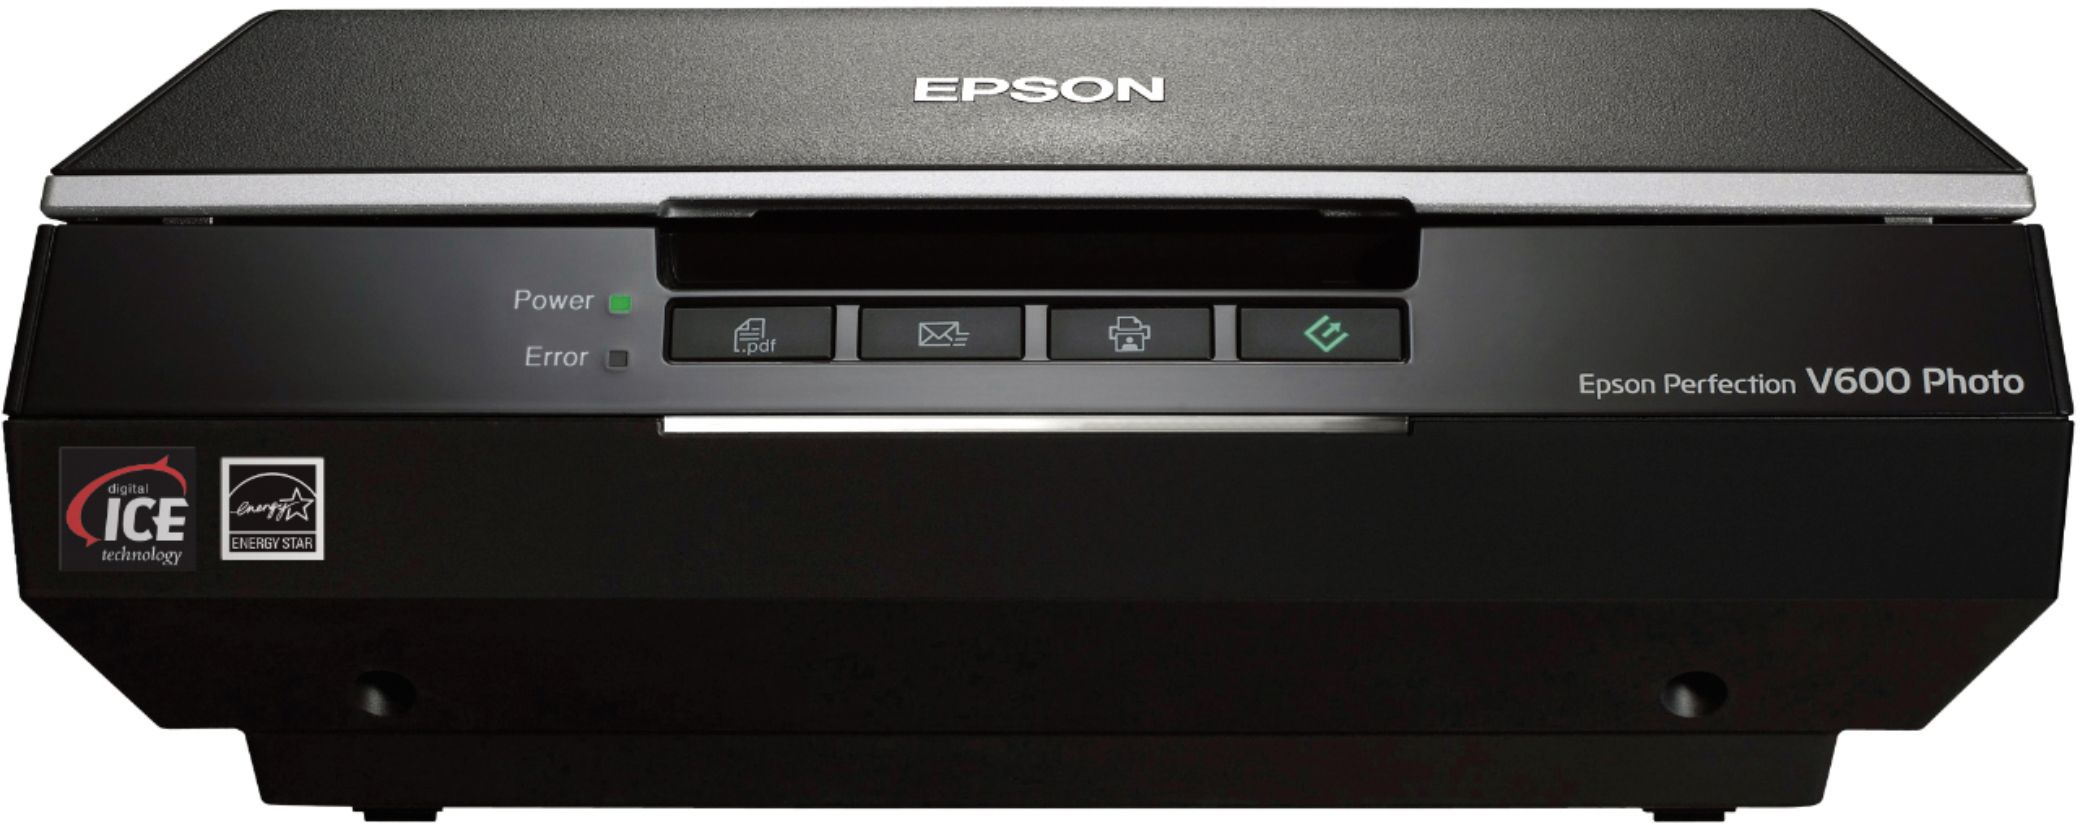 Epson Perfection V600 Photo Scanner Black - Best Buy